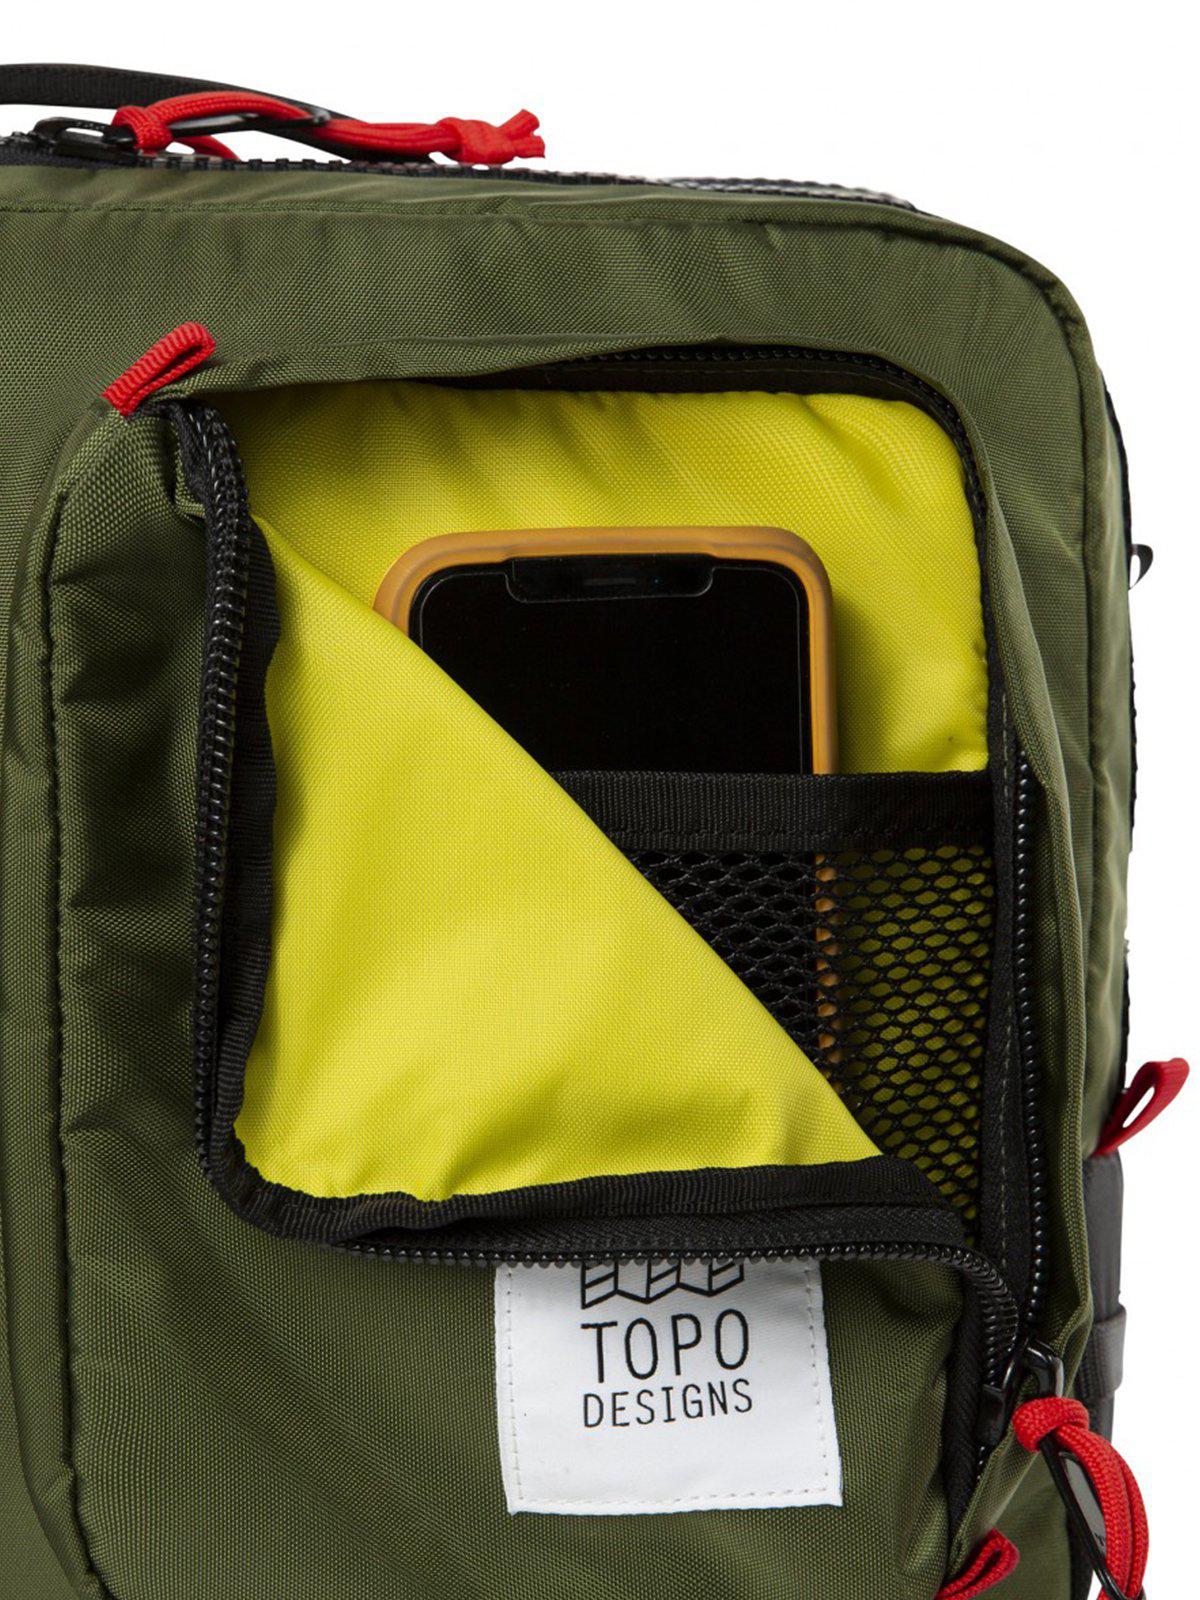 Topo Designs Global Briefcase Navy